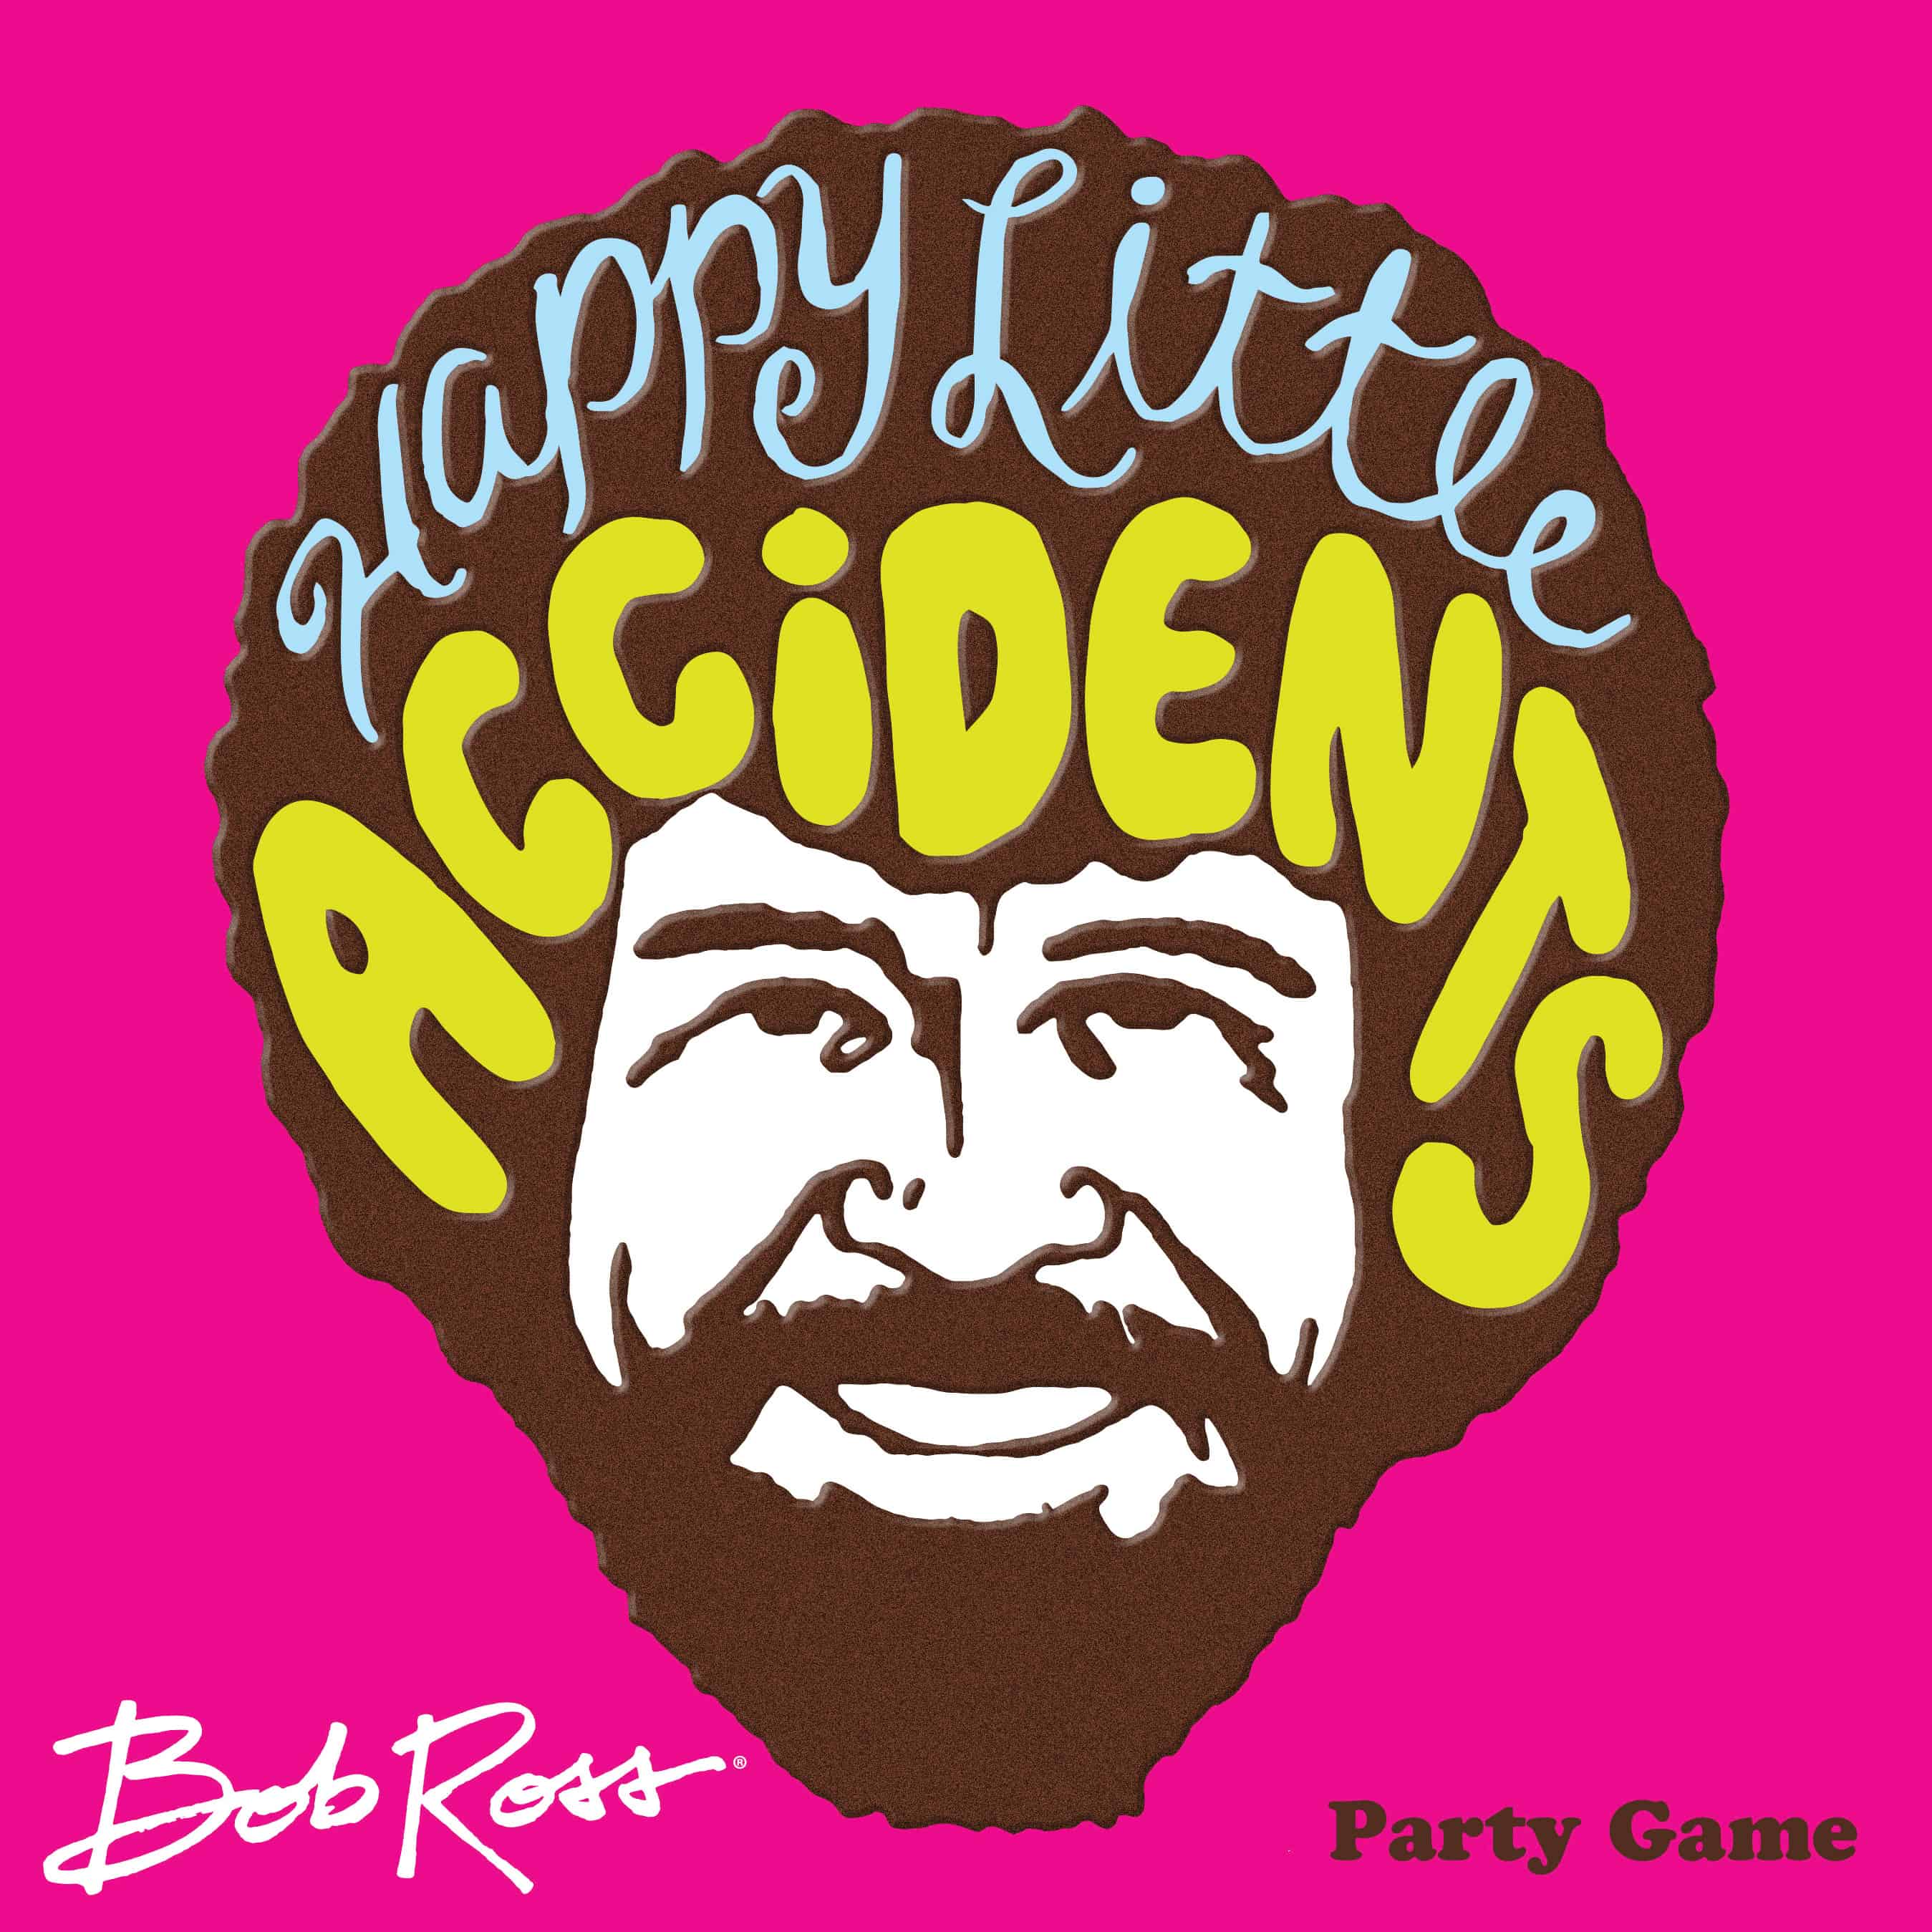 Bob Ross: Happy Little Accidents Logo